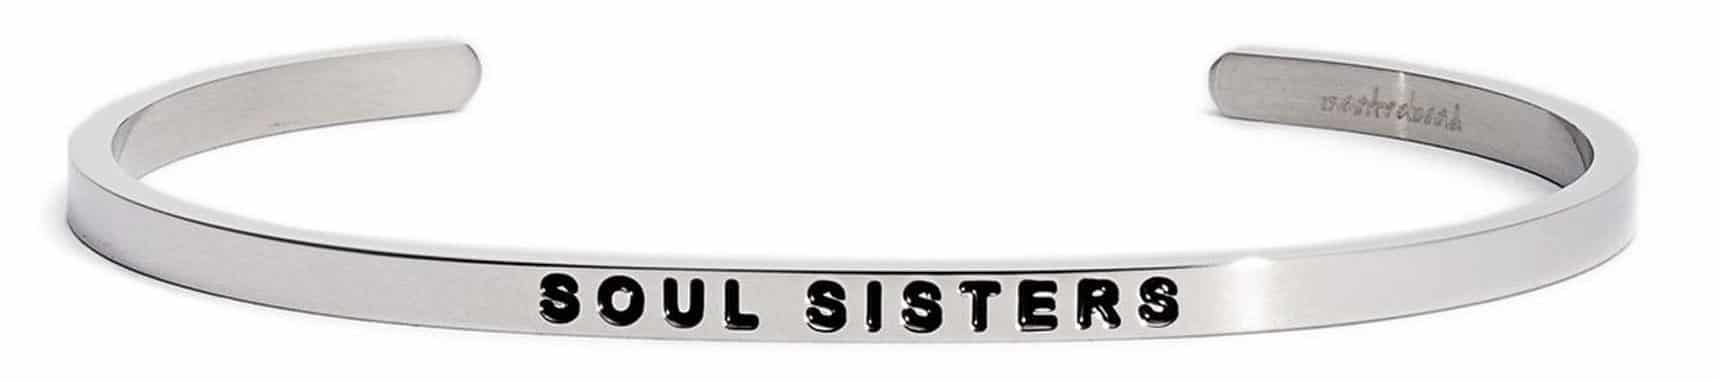 Best Gifts for Sister 2017: Soul Sister Cuff Bracelet 2018